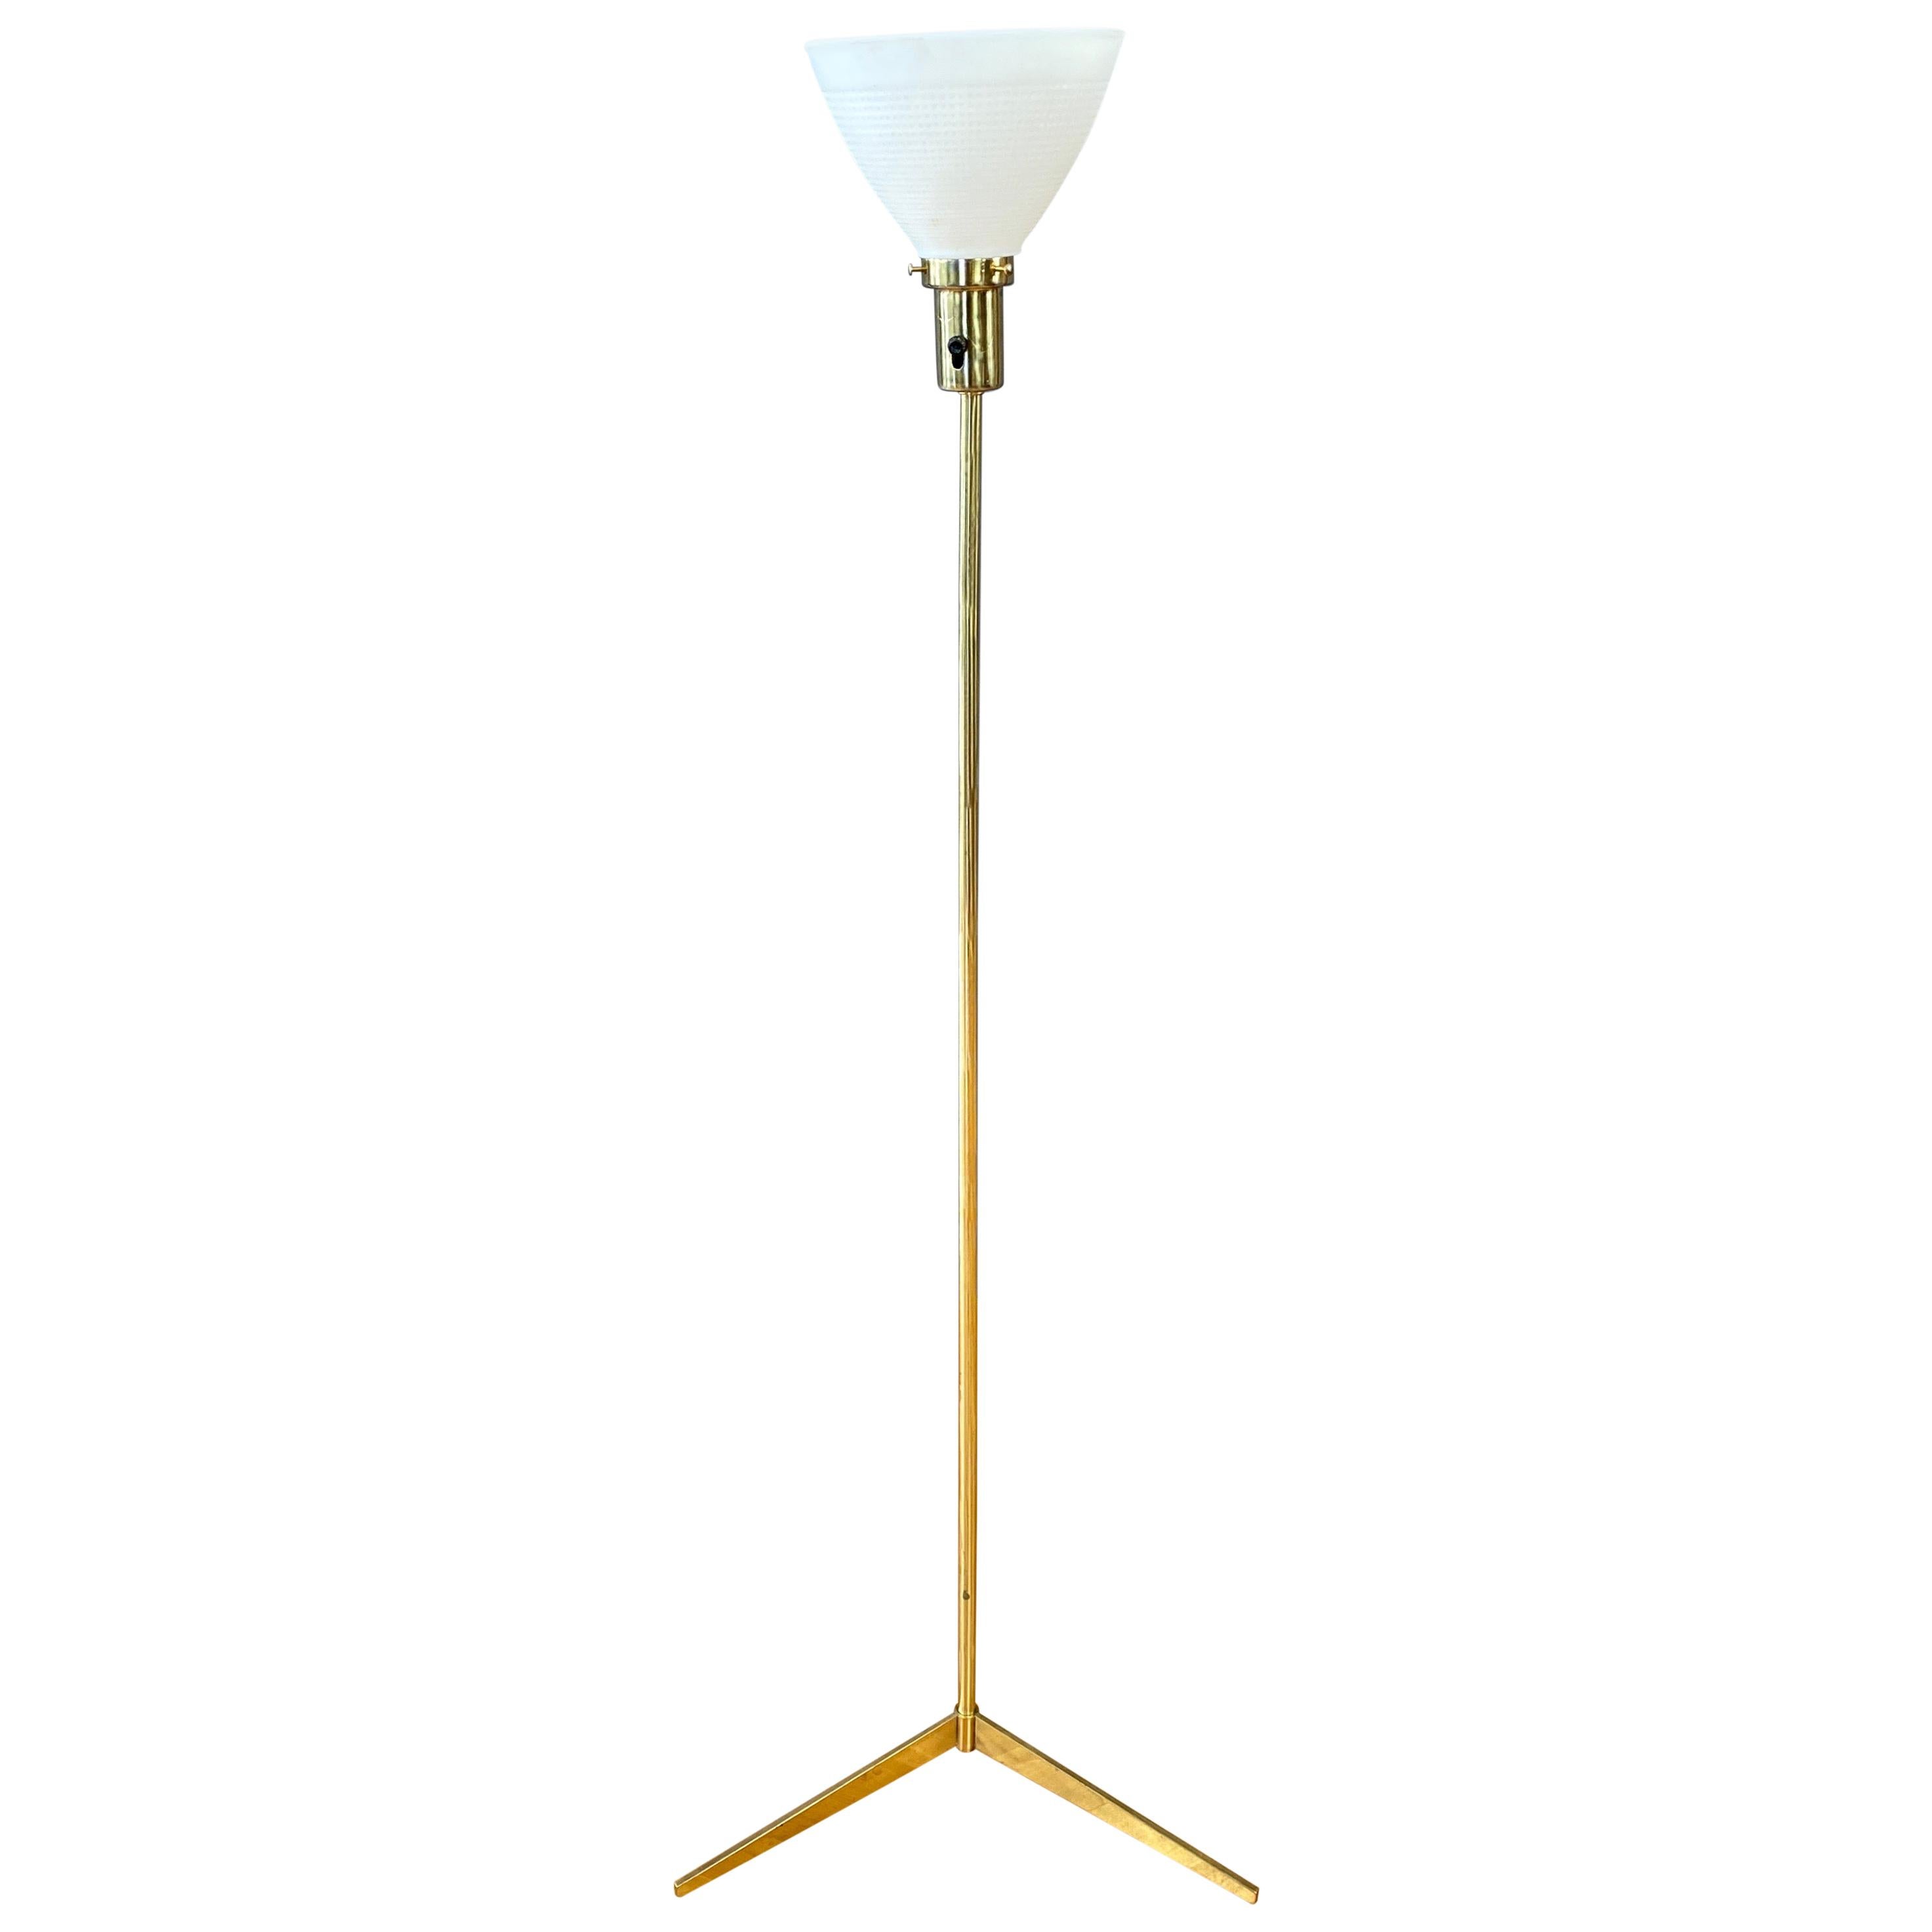 Laurel Lamp Paul McCobb Style Brass Tripod Base Floor Lamp, 1950s